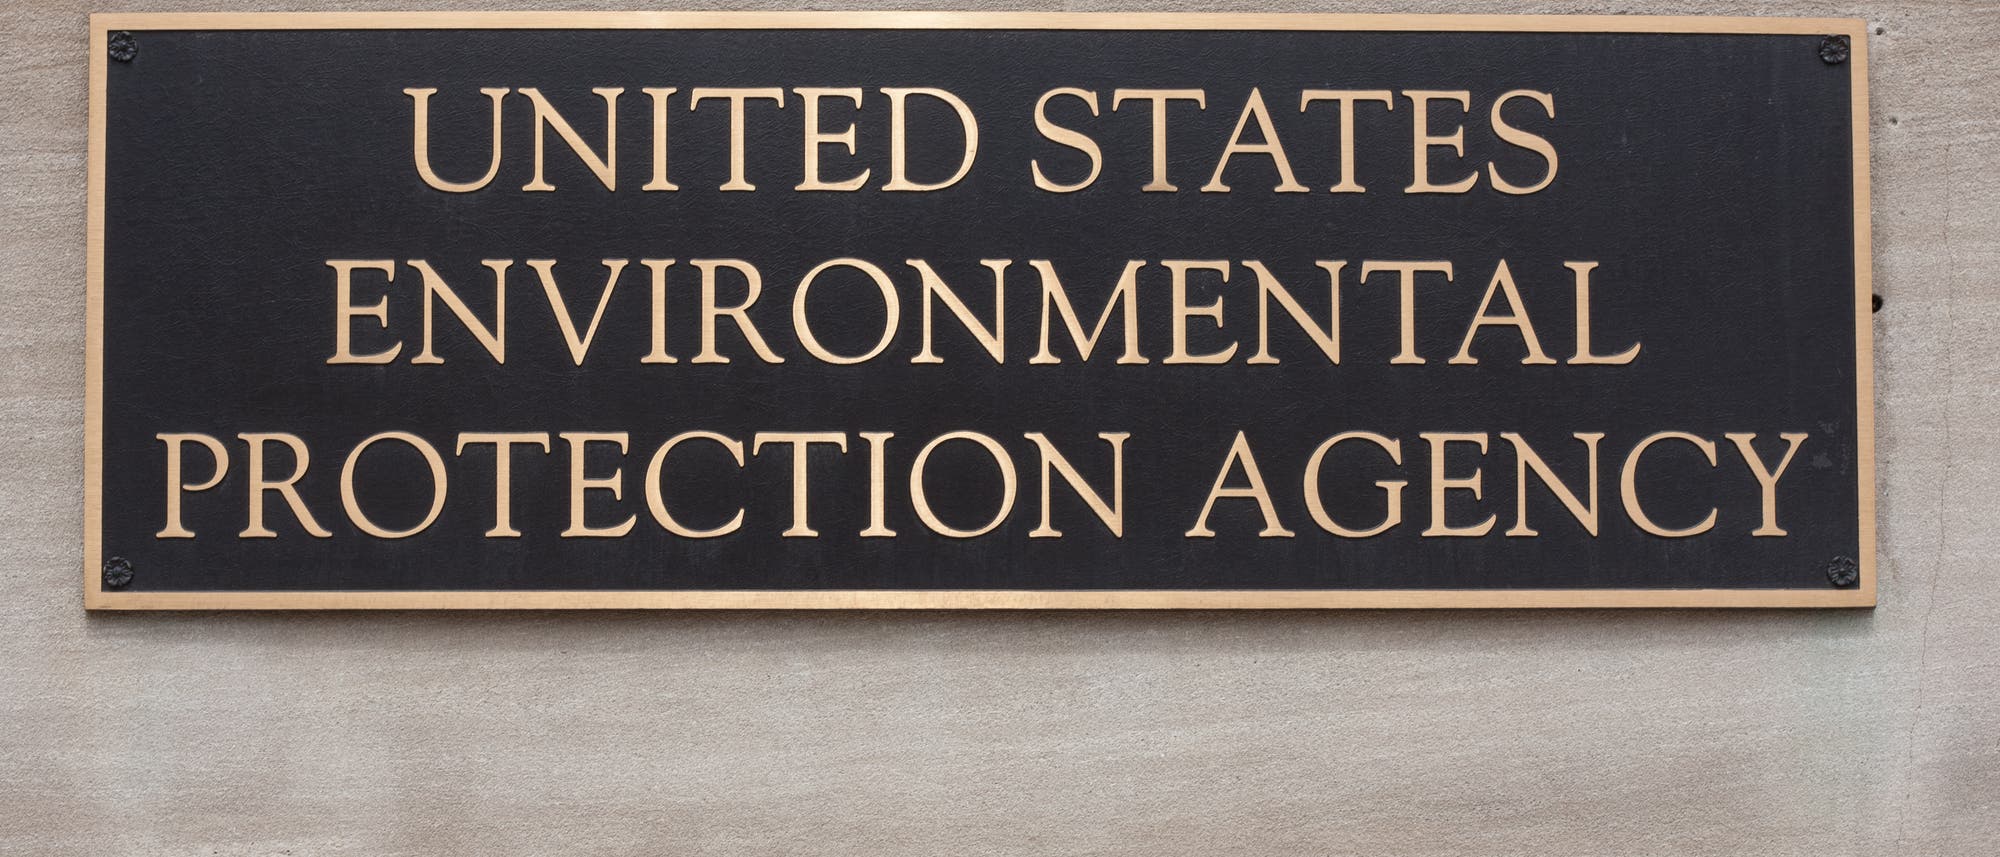 EPA - Umweltbehörde der USA